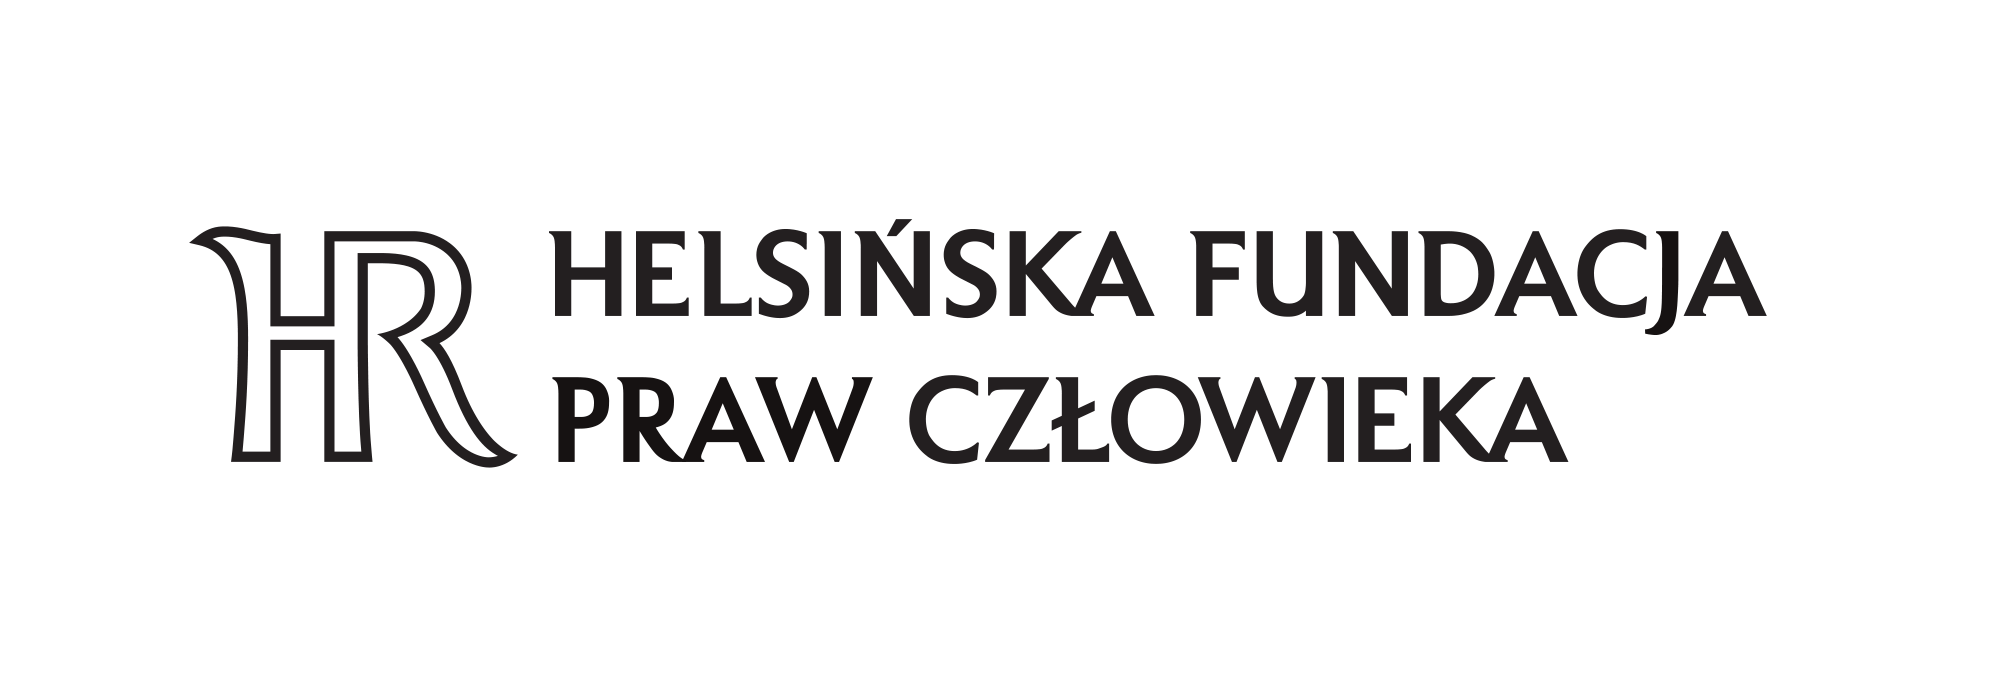 hfpc_logotyp_podstawowy_pl.png